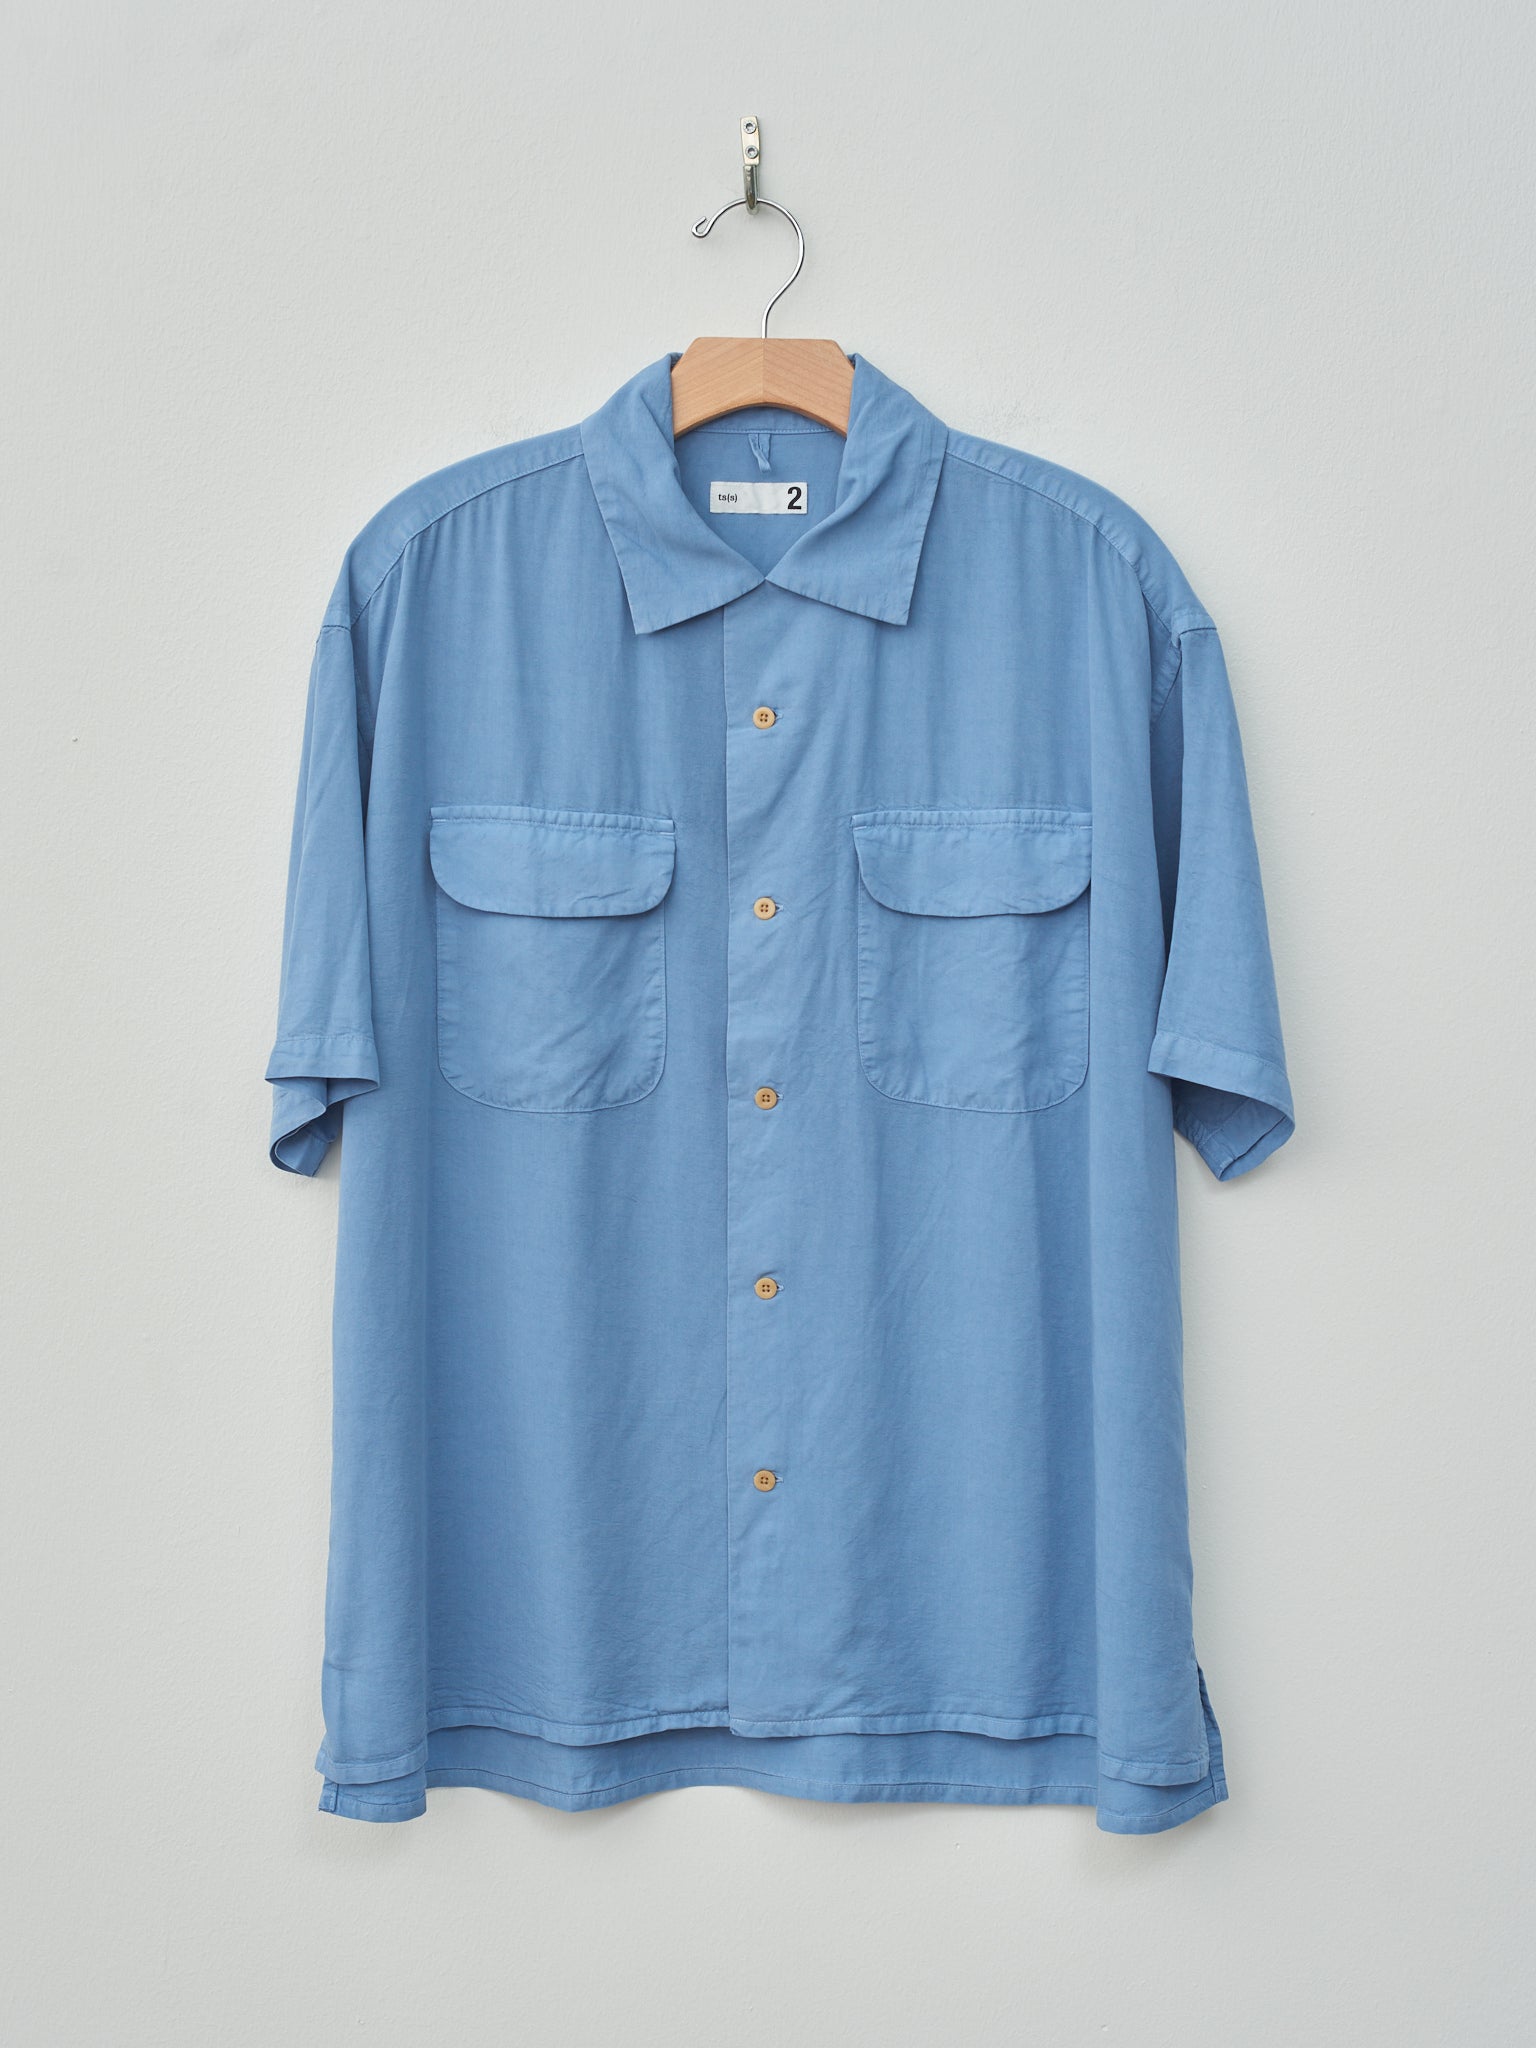 Namu Shop - ts(s) Garment Dye Round Flap Pocket S/S Shirt - Blue